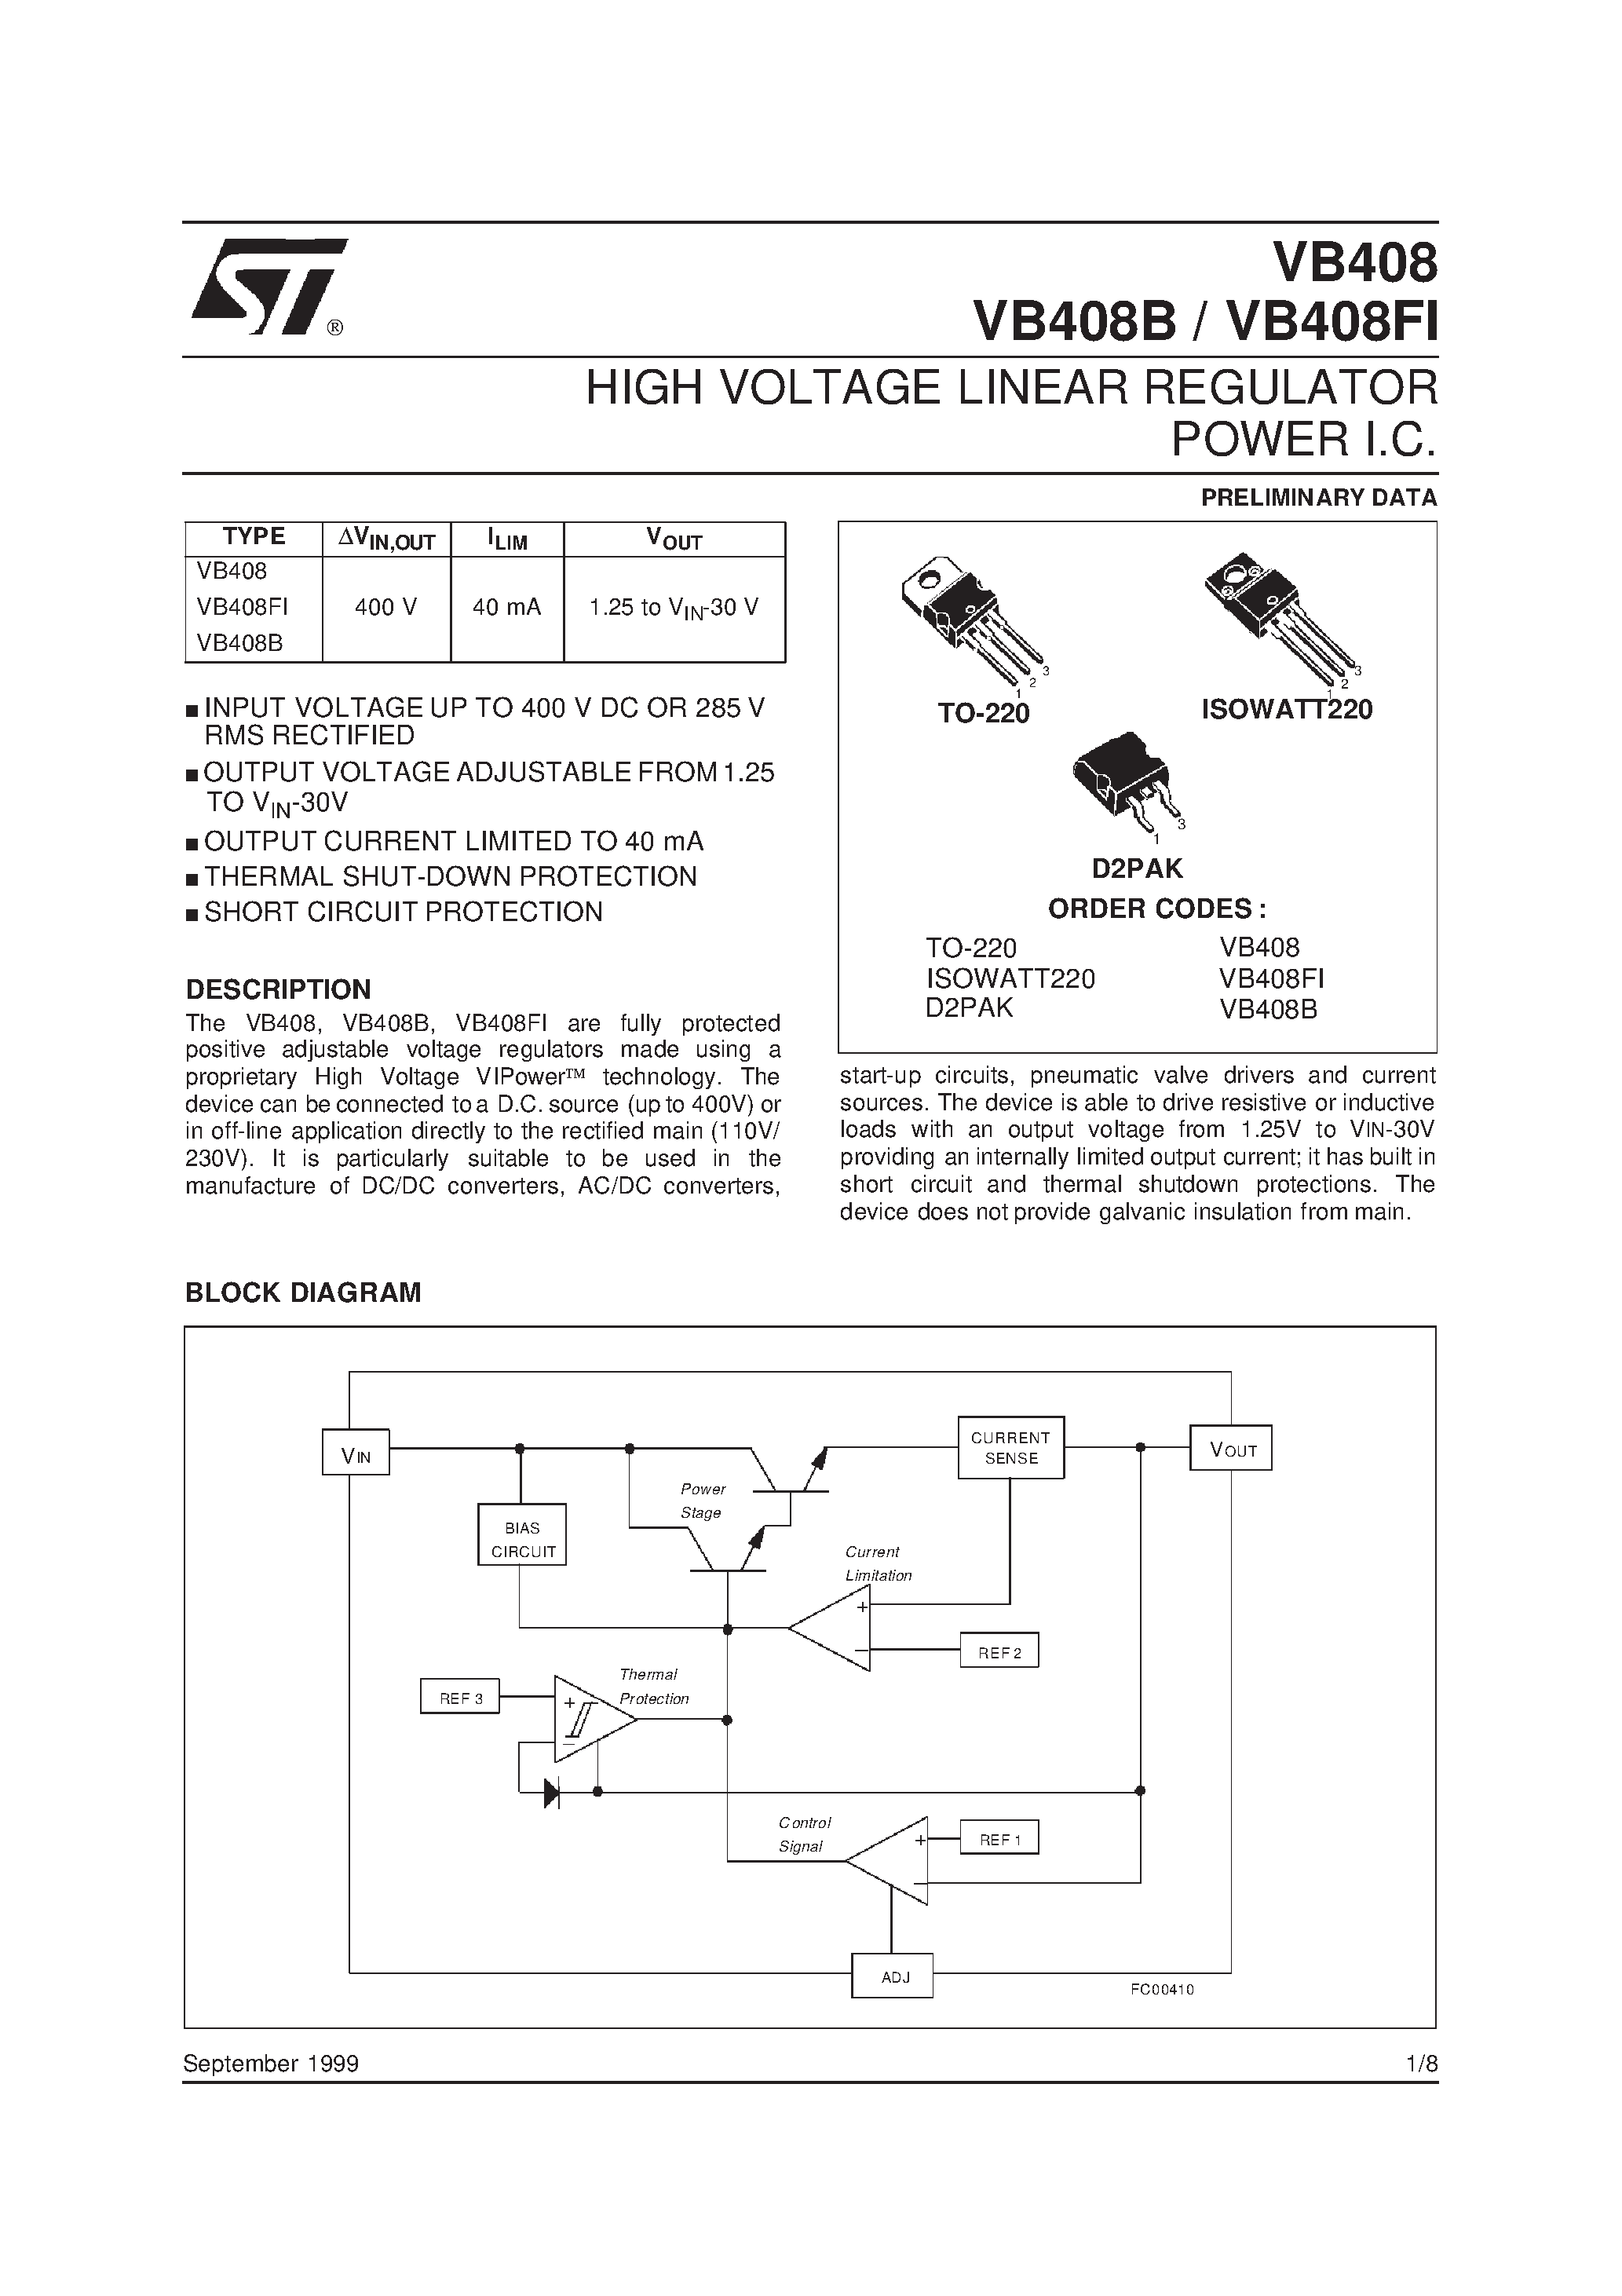 Datasheet VB408 - HIGH VOLTAGE LINEAR REGULATOR POWER I.C. page 1